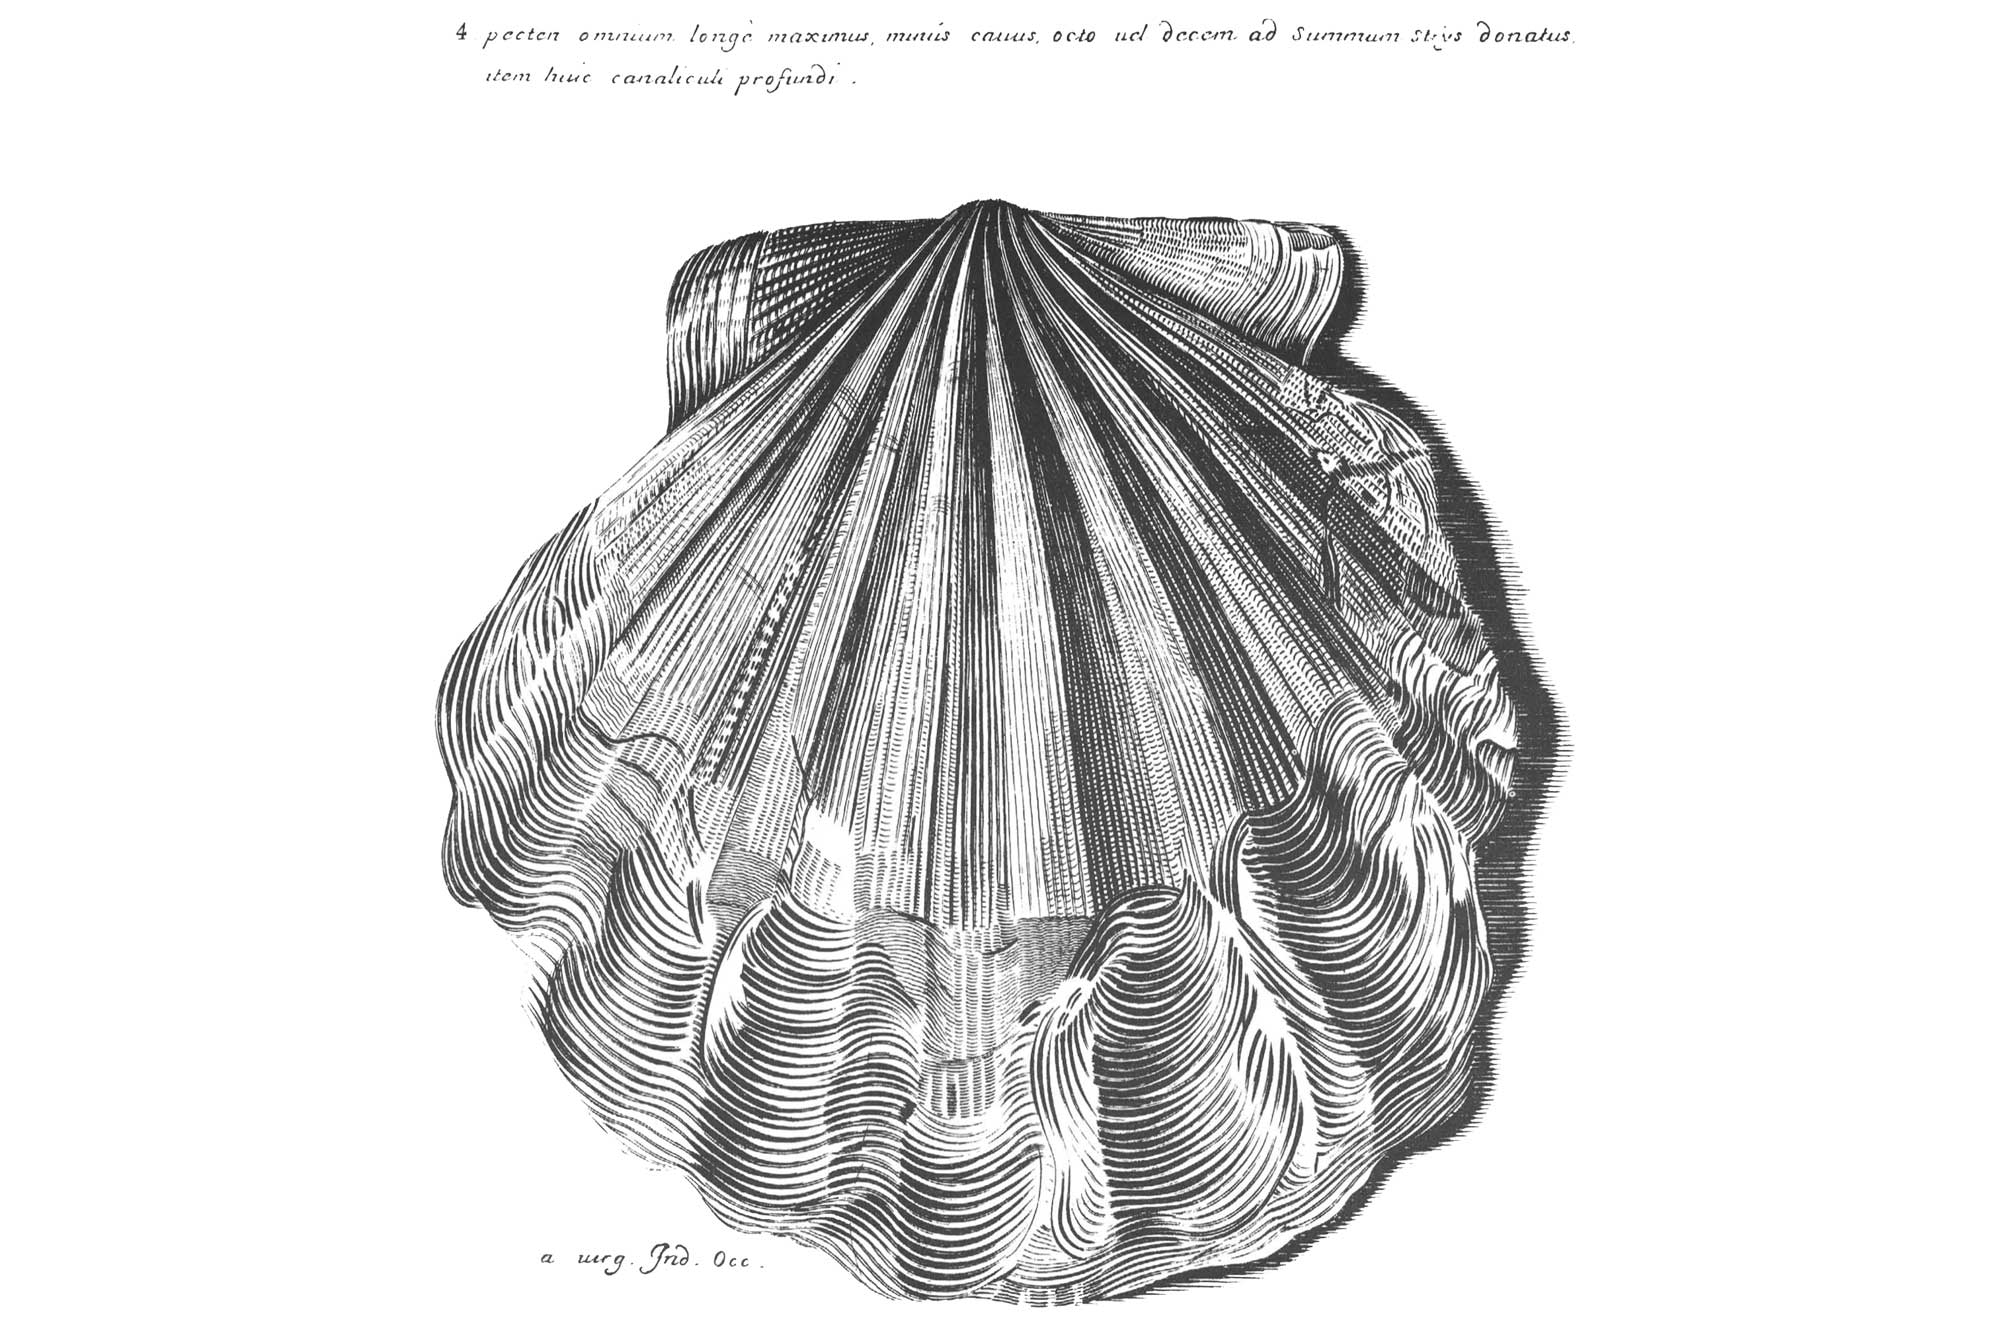 Illustration showing Martin Lister's illustration of the fossil scallop shell Chesapecten jeffersonius.